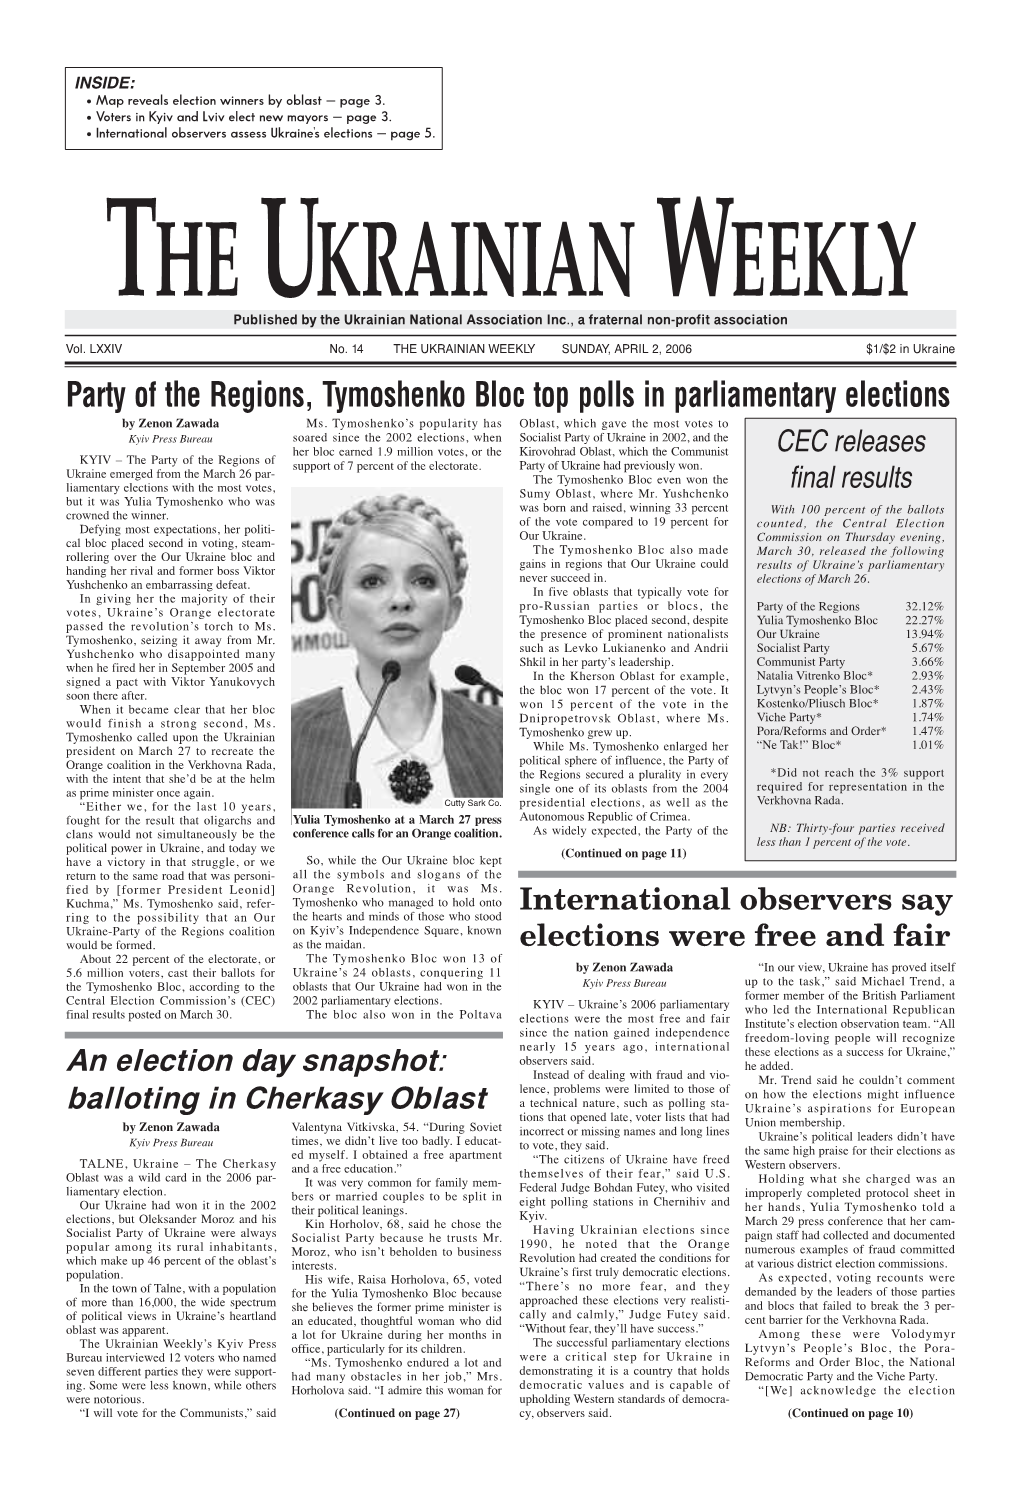 The Ukrainian Weekly 2006, No.14